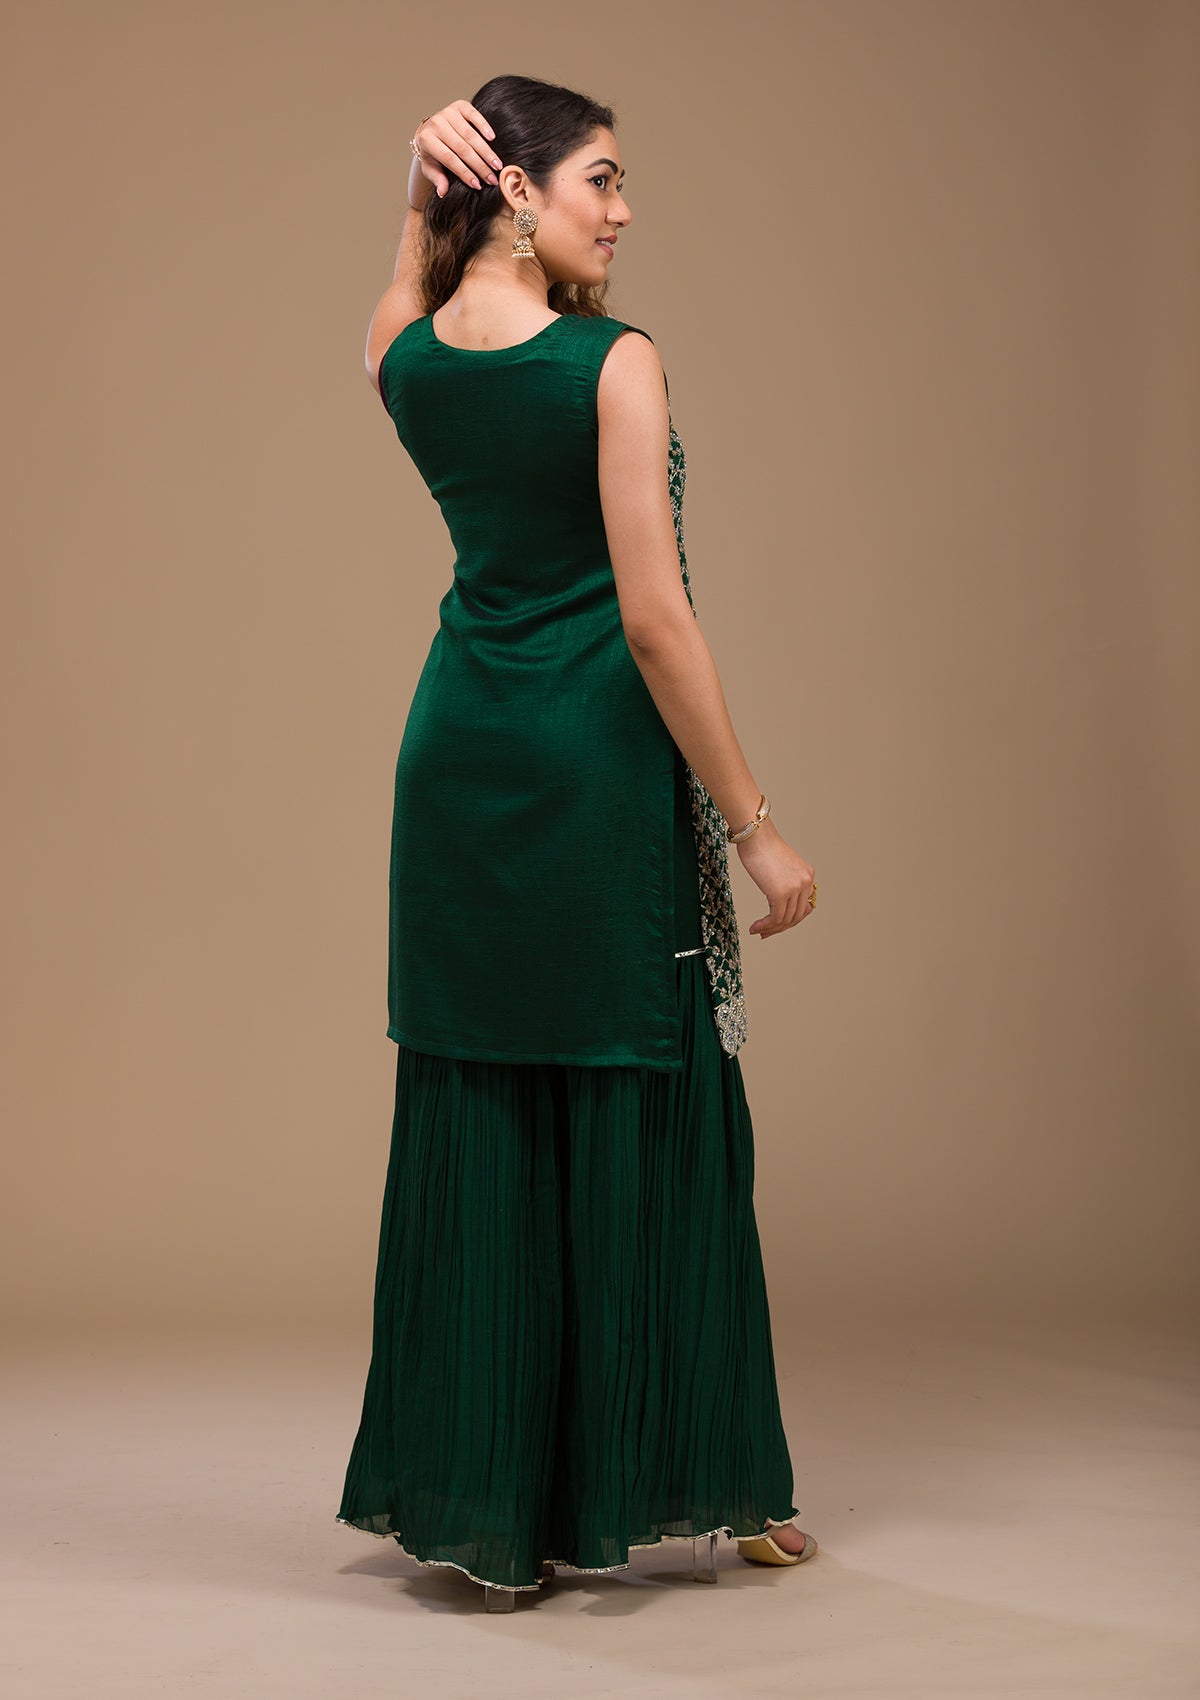 Gorgeous Raw Silk Ballgown #silkdress #amandaferrisa